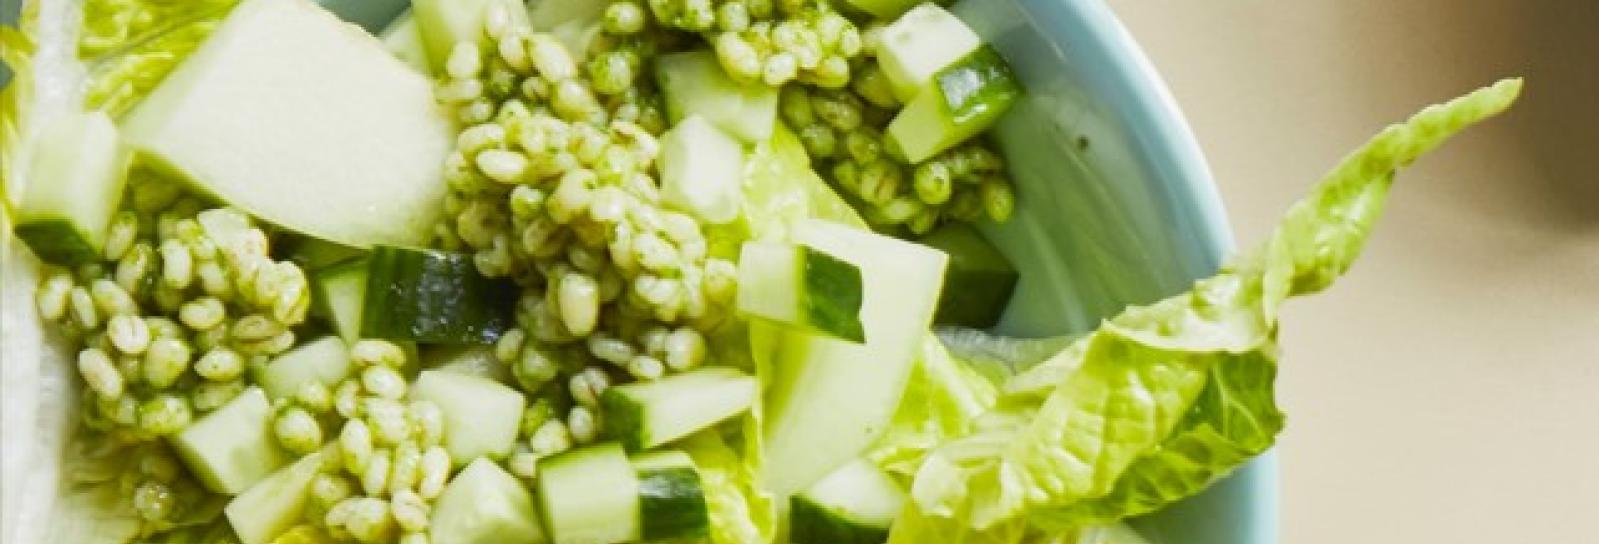 Grøn salat med hjertesalat, agurk, melon og korn